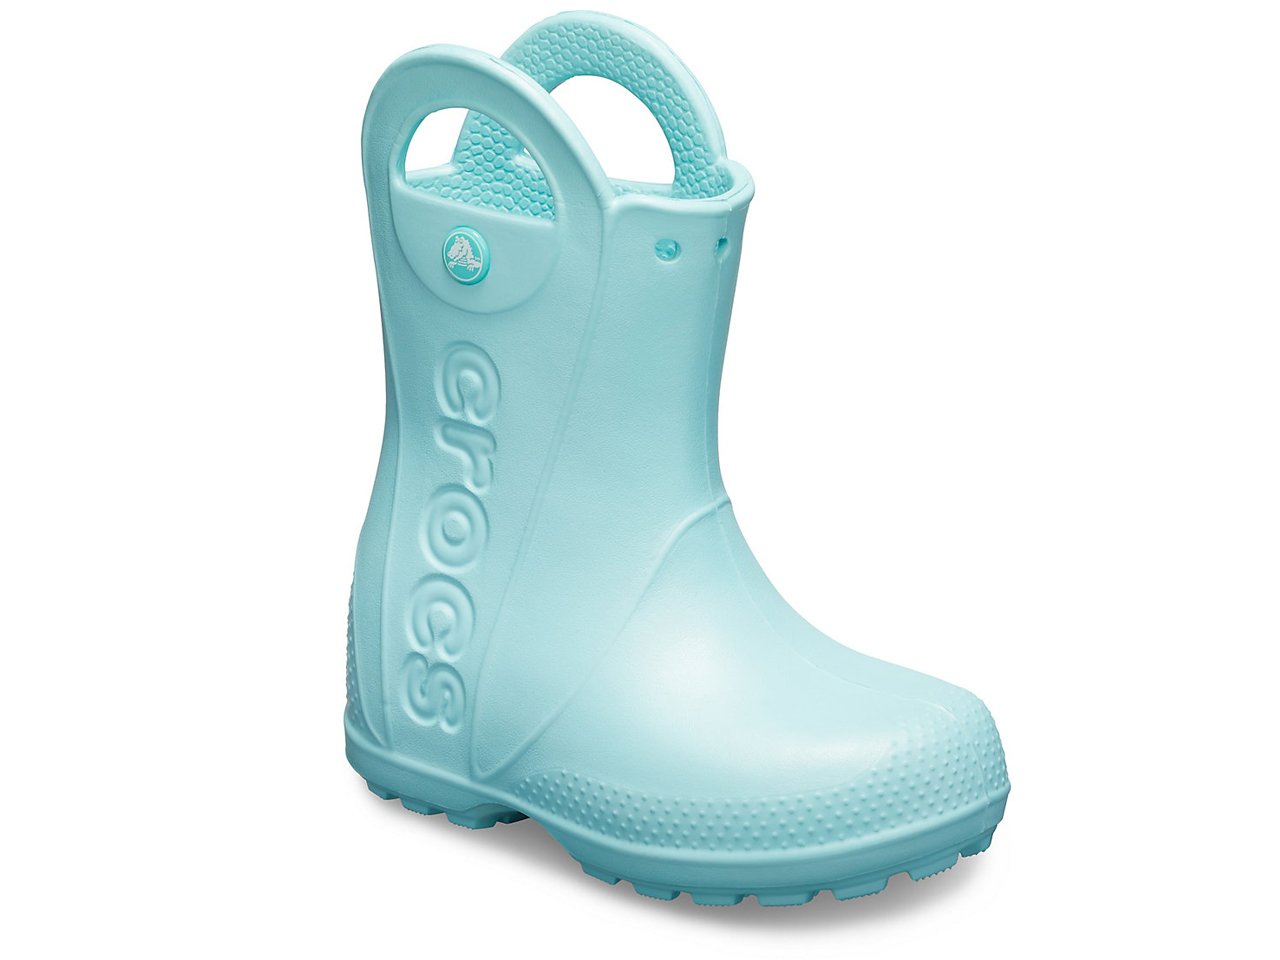 15 adorable kids rain boots to brighten rainy spring days